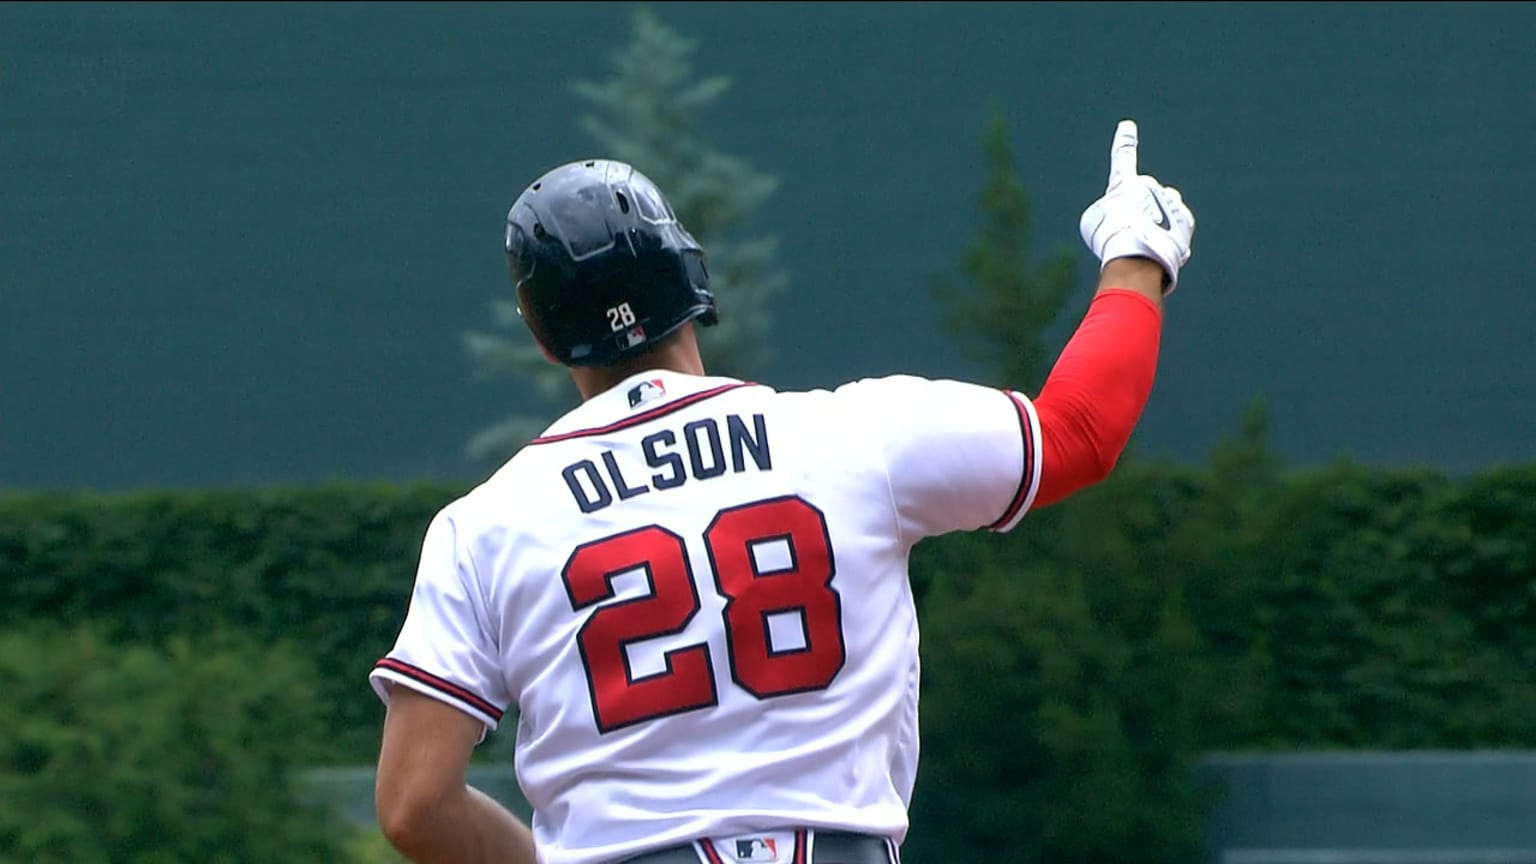 MLB trends: Matt Olson chasing ultra-rare 60-double season; one